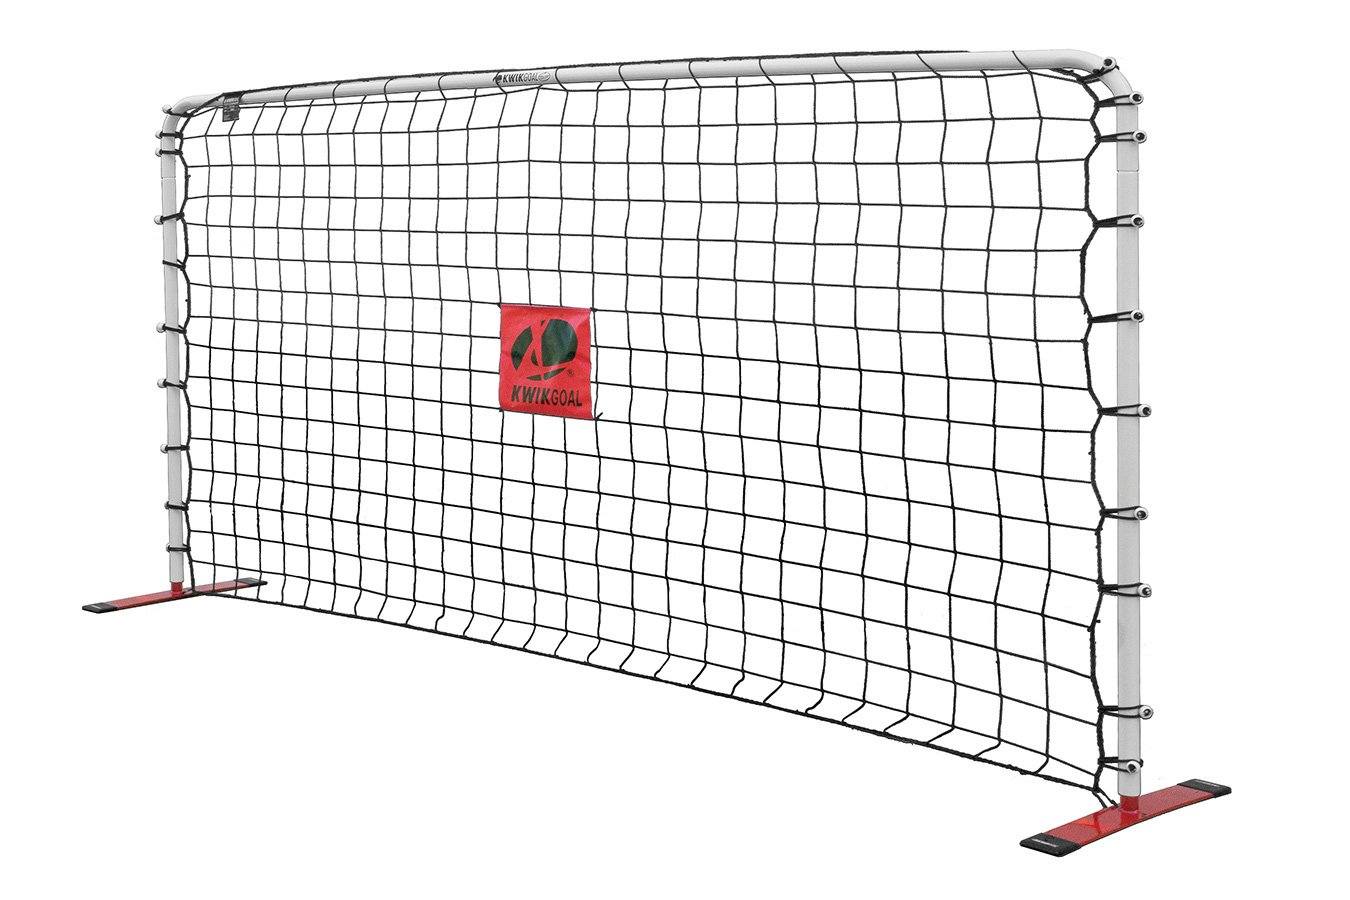 Kwikgoal AFR-2® Rebounder | 2B1602 Training equipment Kwikgoal 5 x 10 